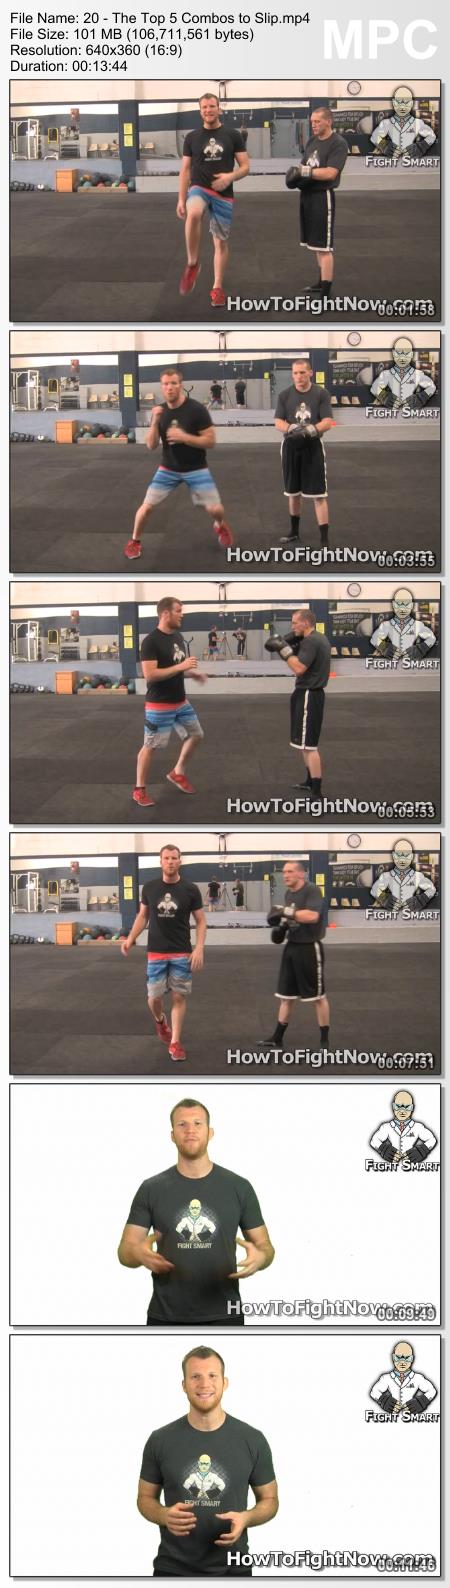 Travis Roesler - Head Movement Training